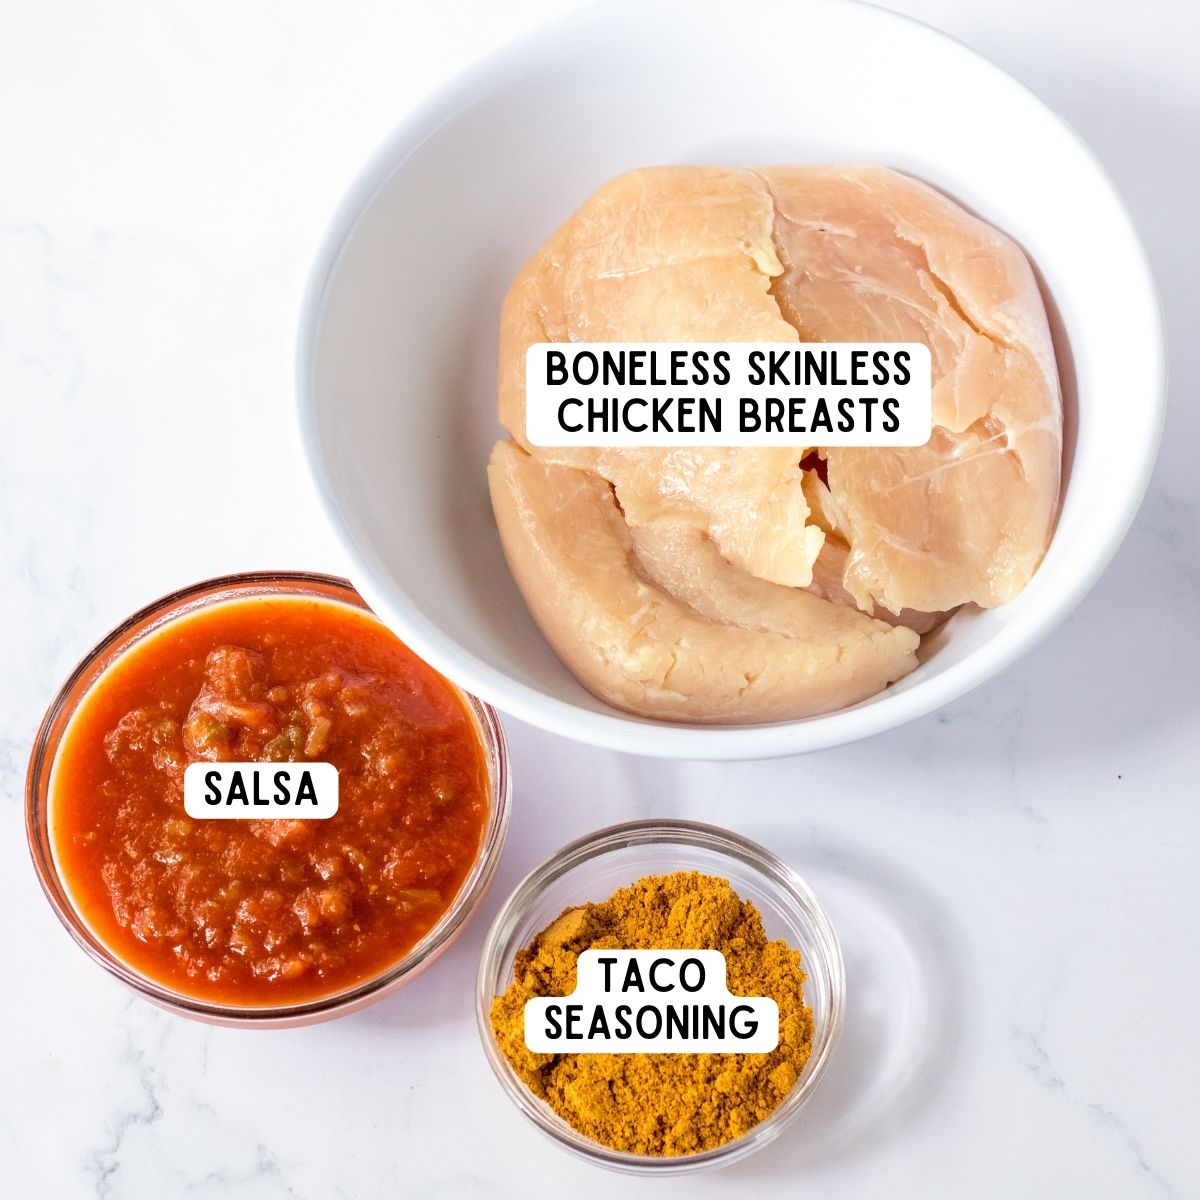 Boneless skinless chicken breasts, salsa, and taco seasoning.